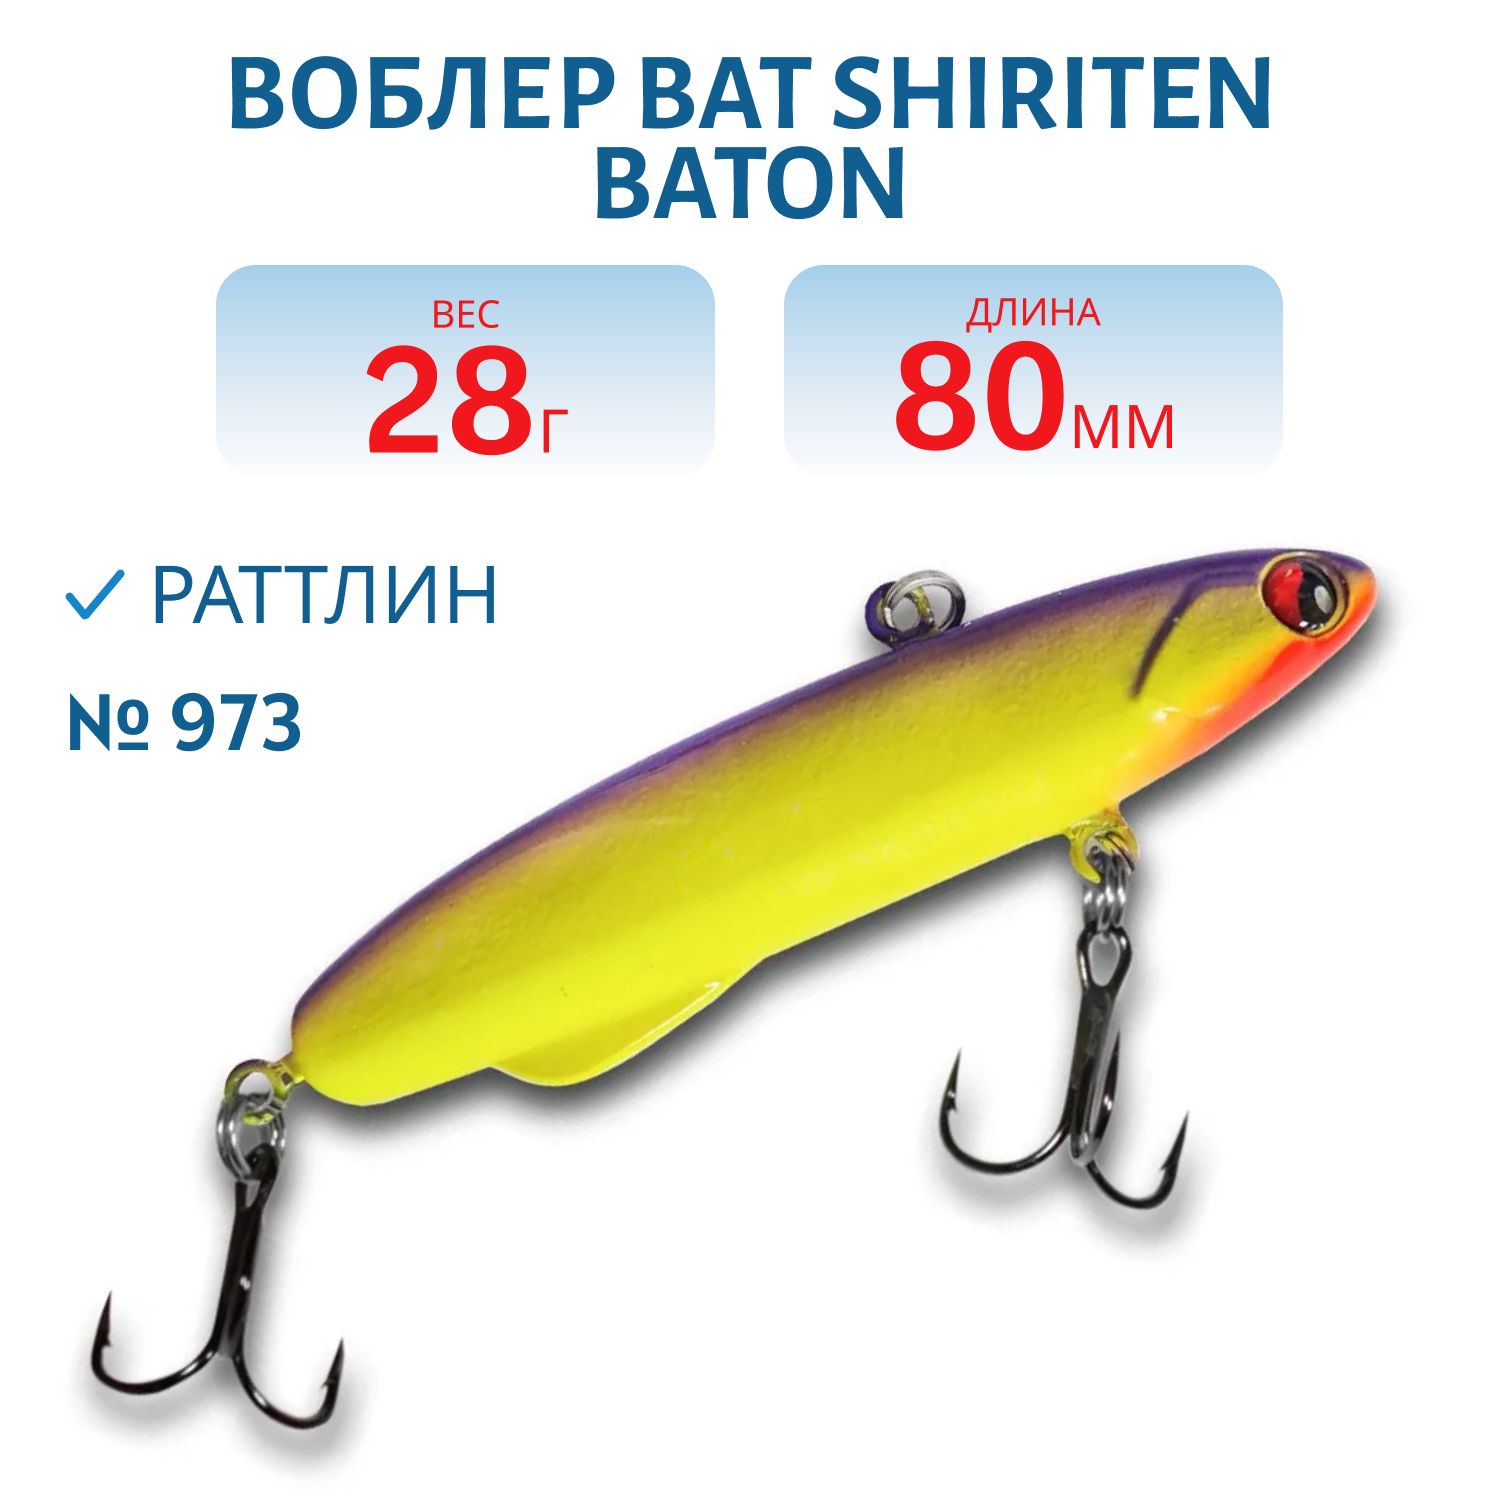 Раттлин BAT SHIRITEN BATON 80 28 гр. (Silicon) # 973